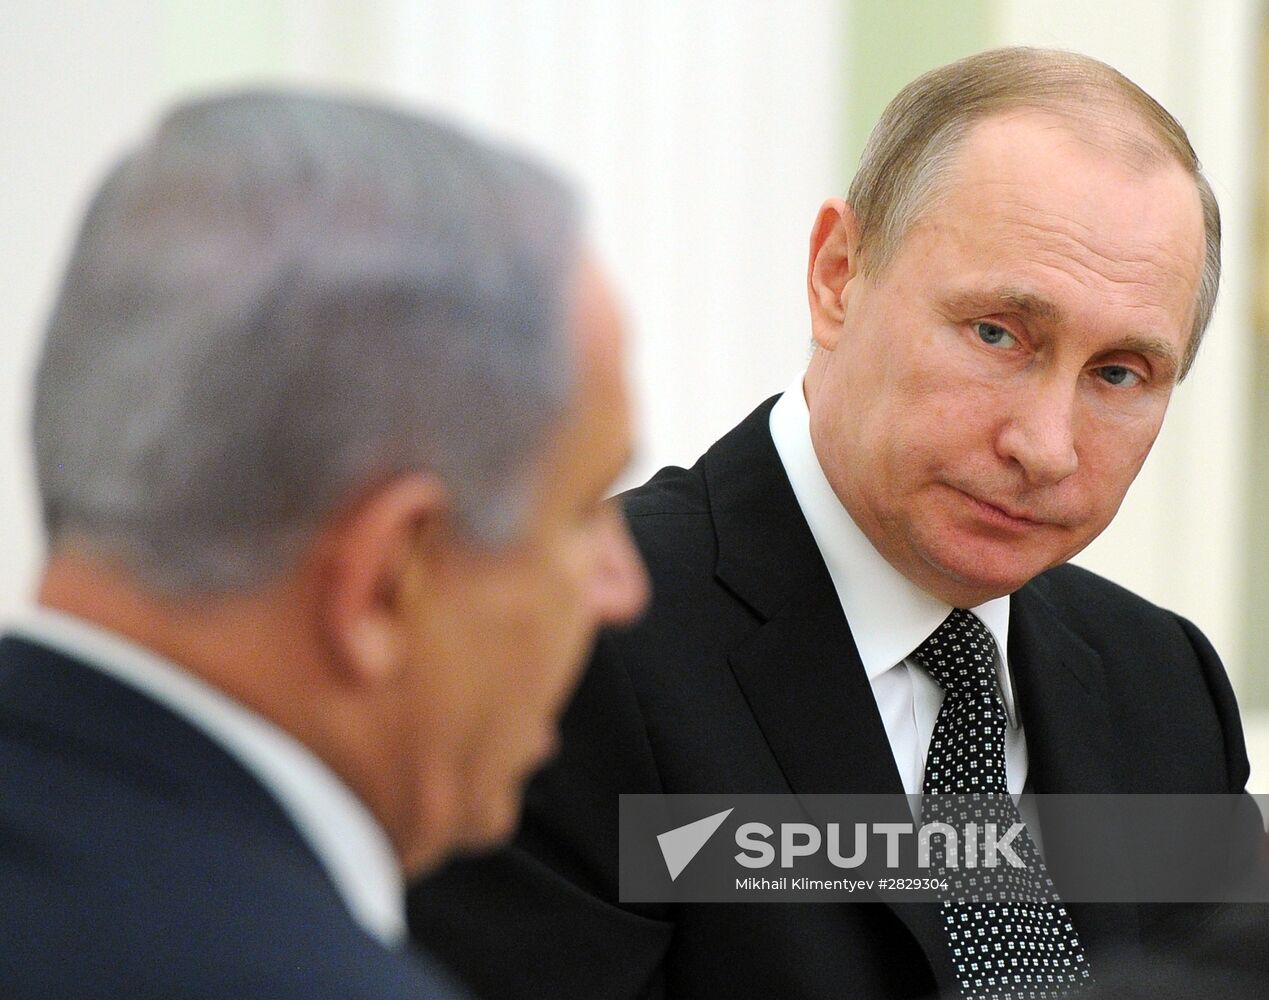 Russian President Vladimir Putin meets with Prime Minister of Israel Benjamin Netanyahu